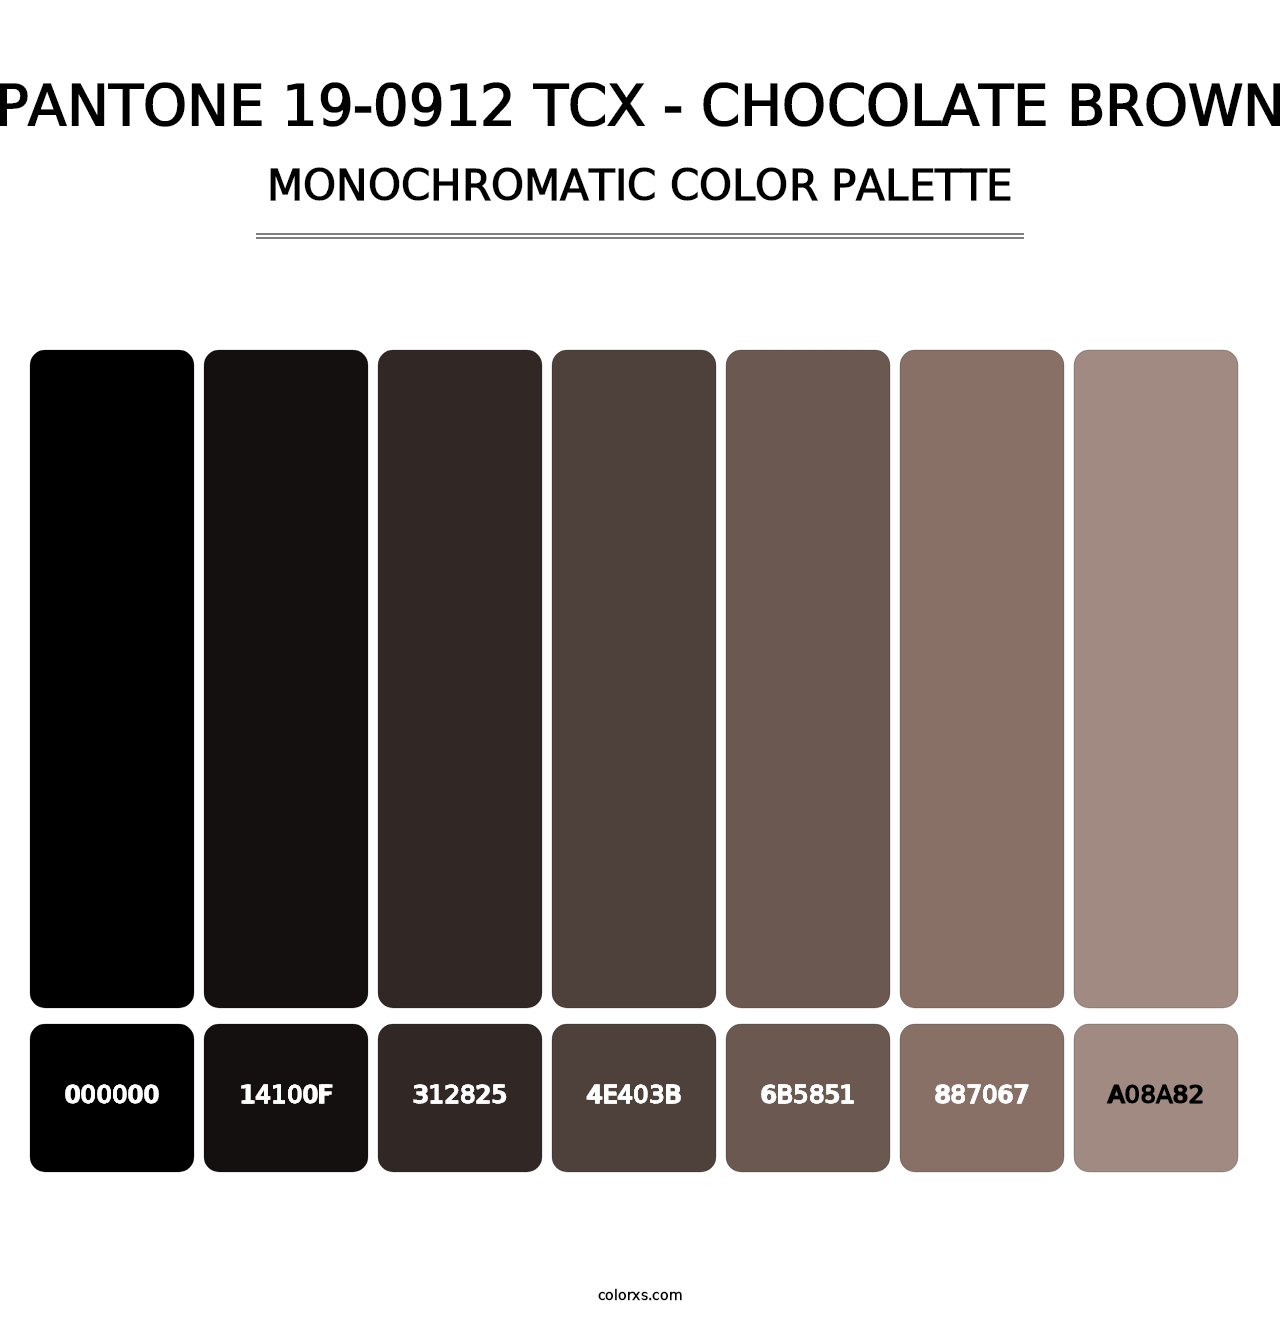 PANTONE 19-0912 TCX - Chocolate Brown - Monochromatic Color Palette